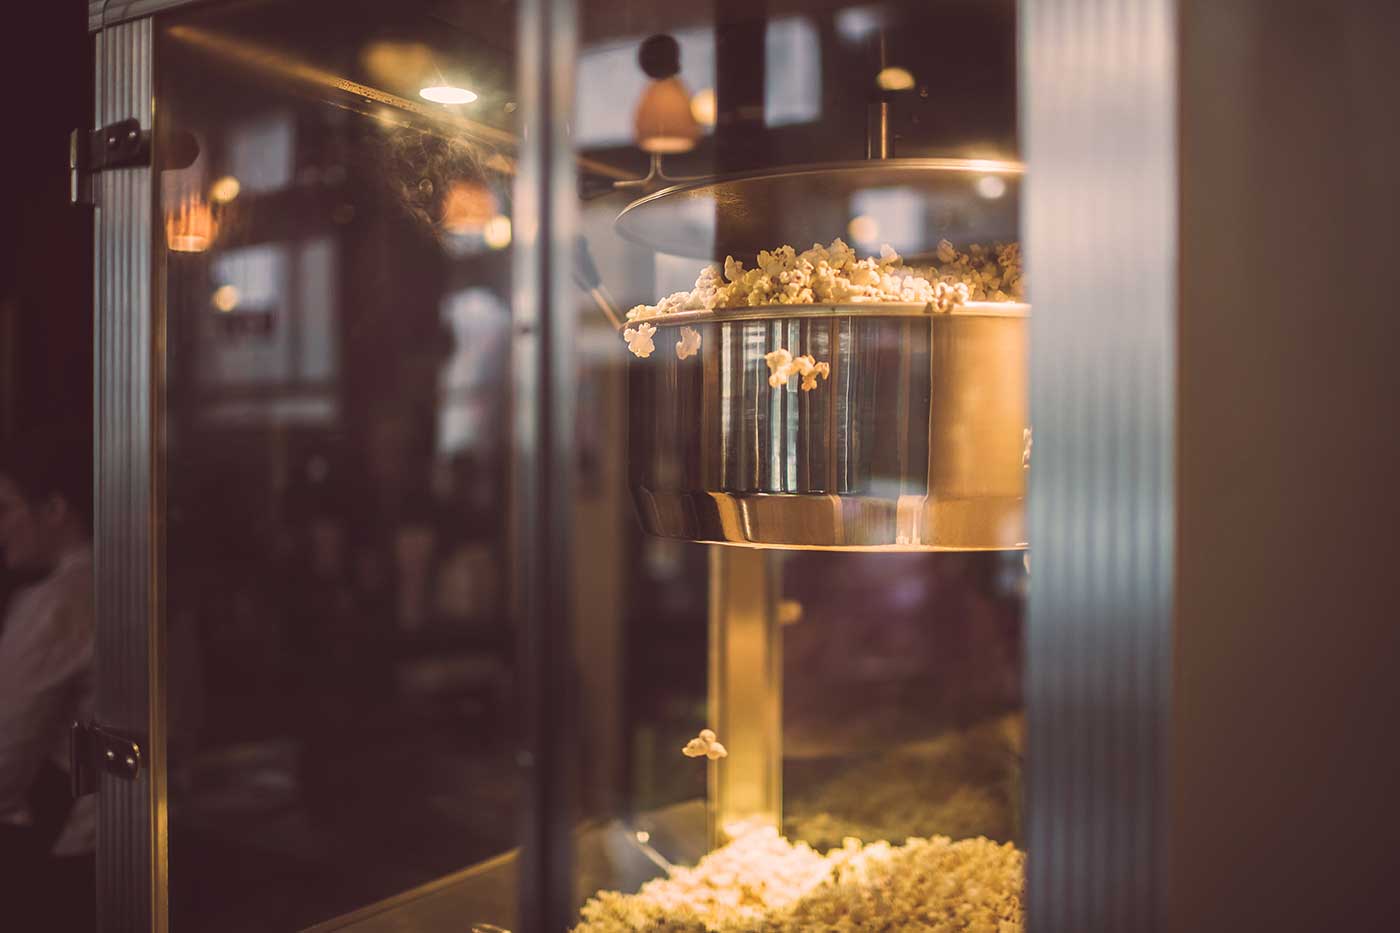 Theatre Popcorn Machine